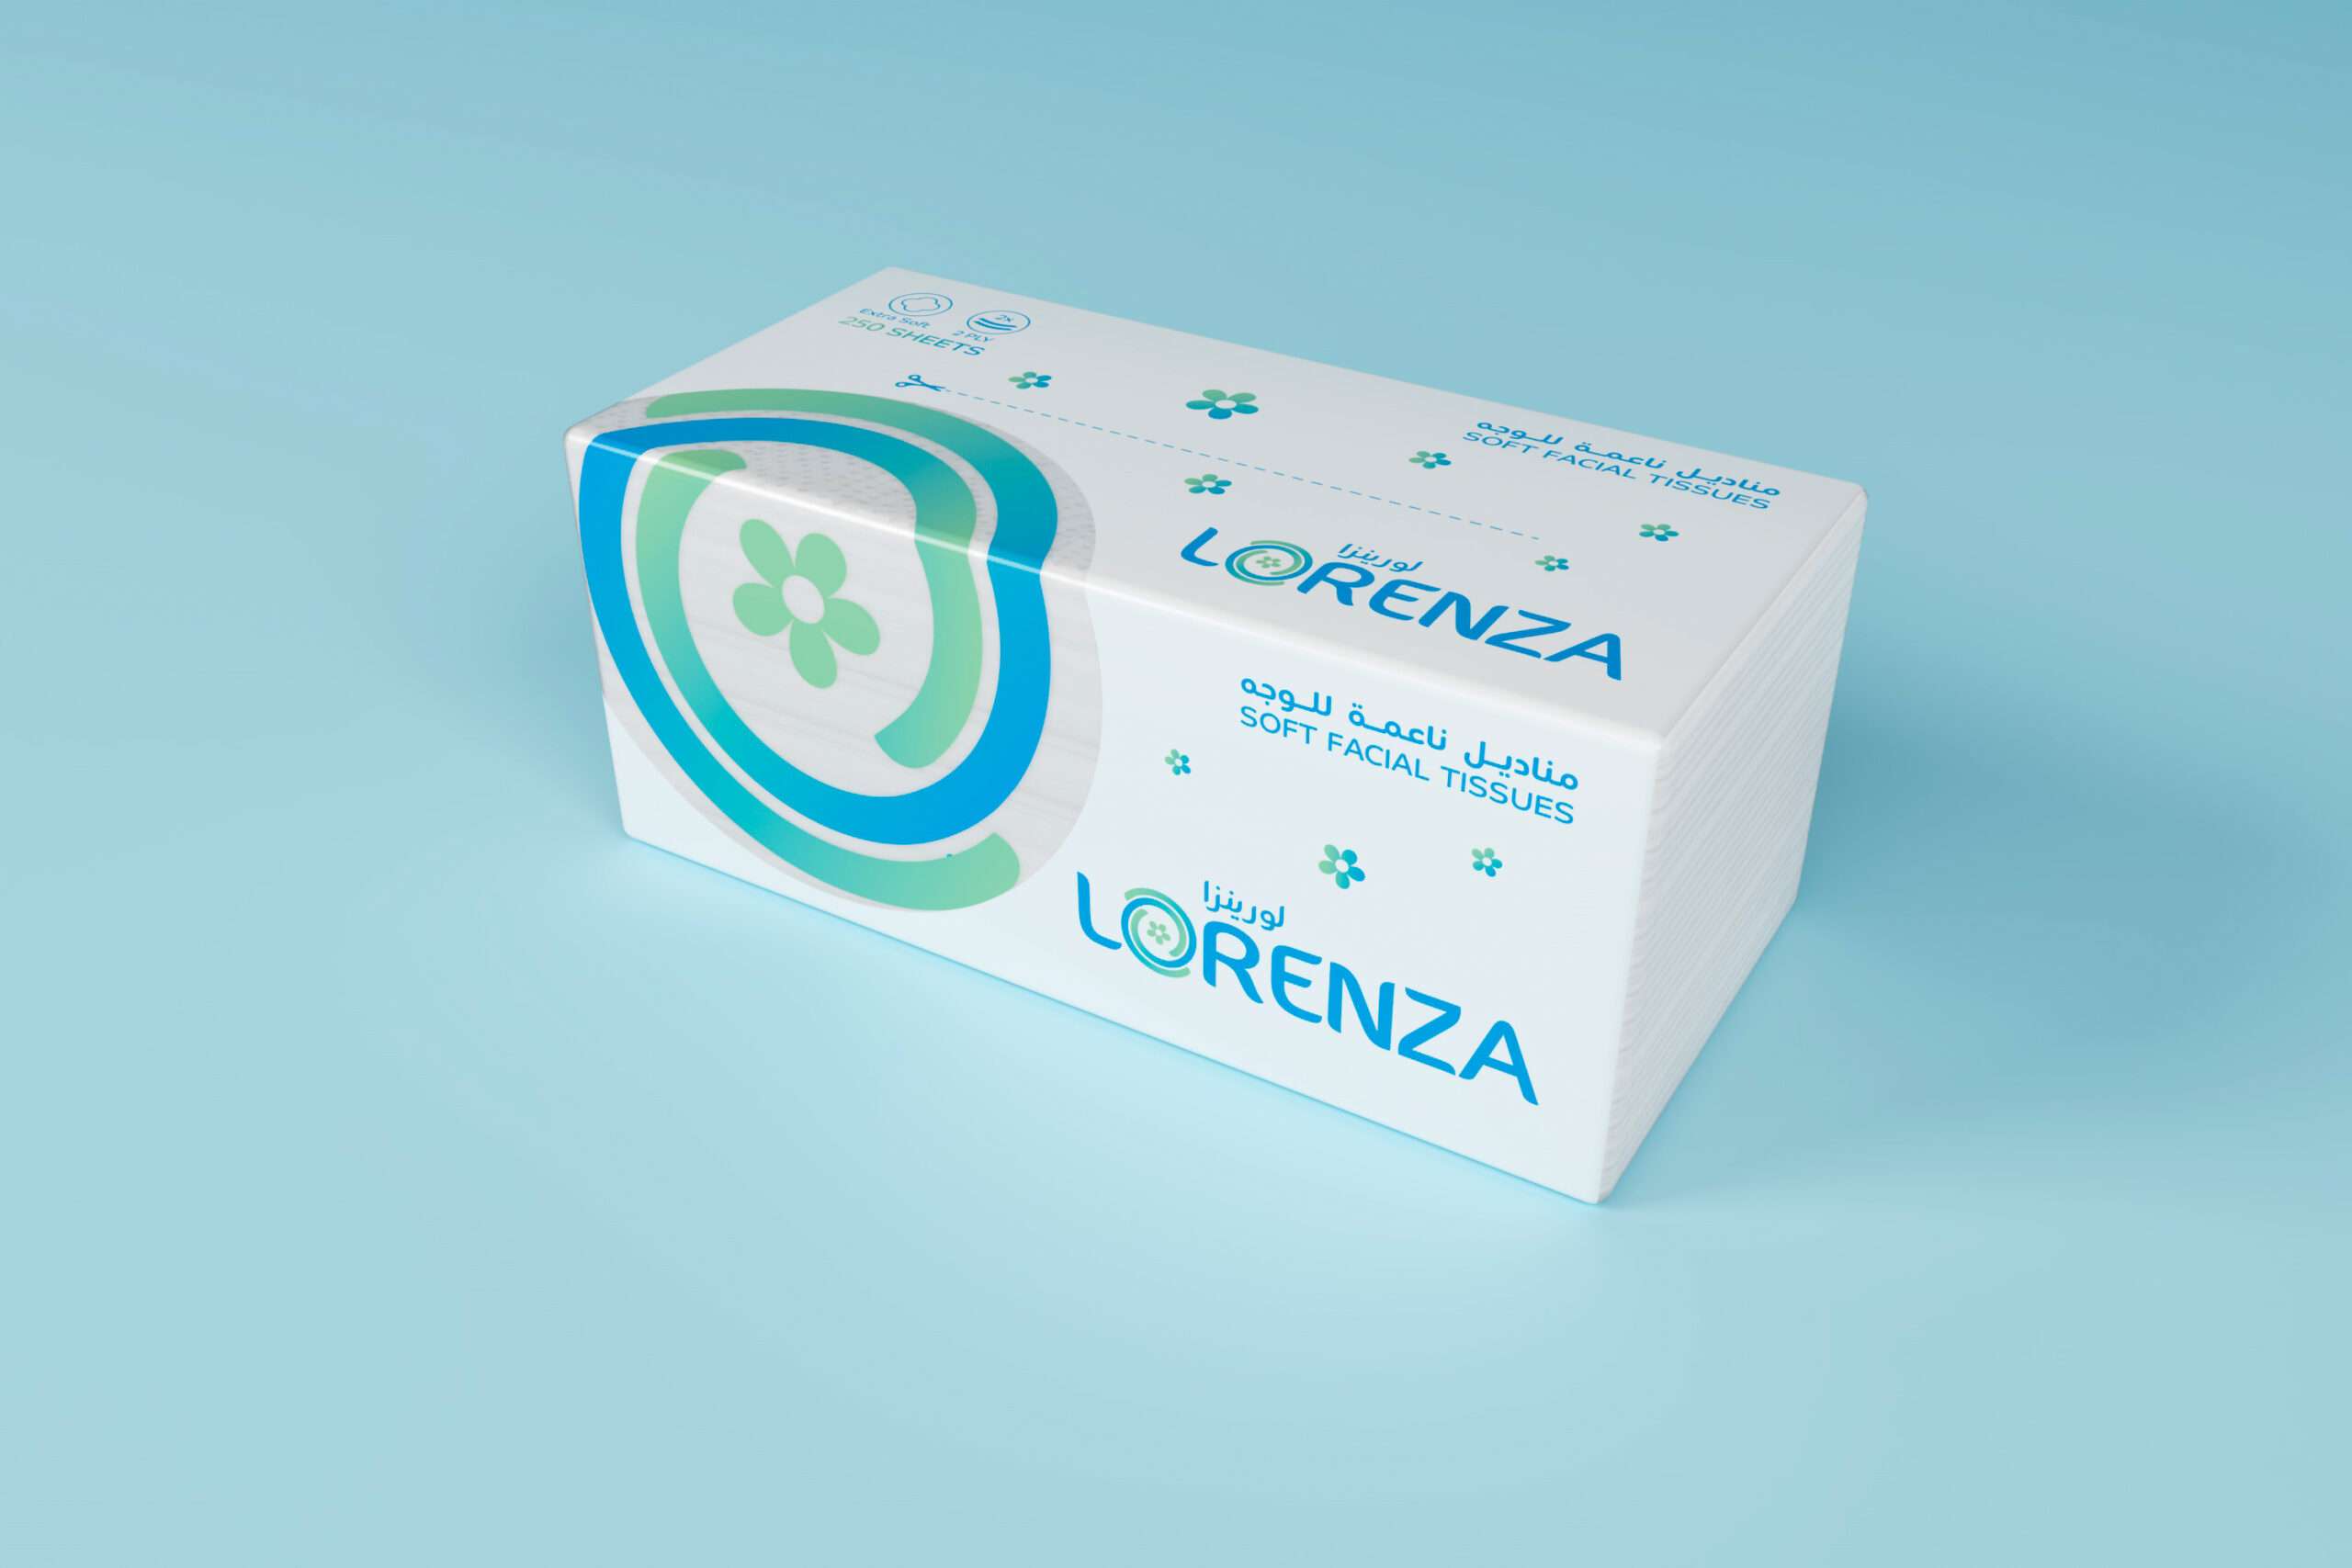 Lorenza Hand Towel Nylon Sheet Size 20 x 19 cm Number PLY 1 SKU 250 Sheet